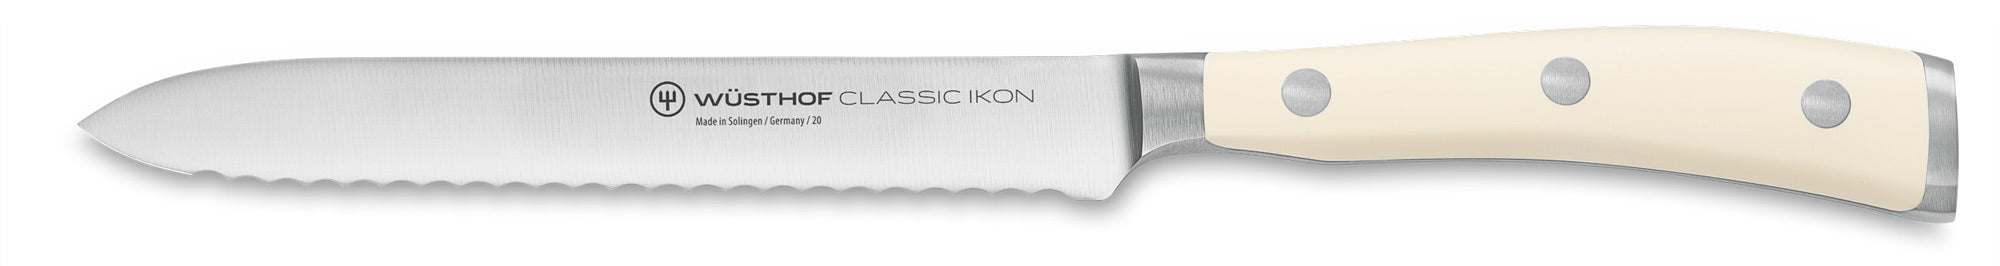 Wusthof Classic IKON Creme Sausage Serrated Utility Knife Canada, 4126-6